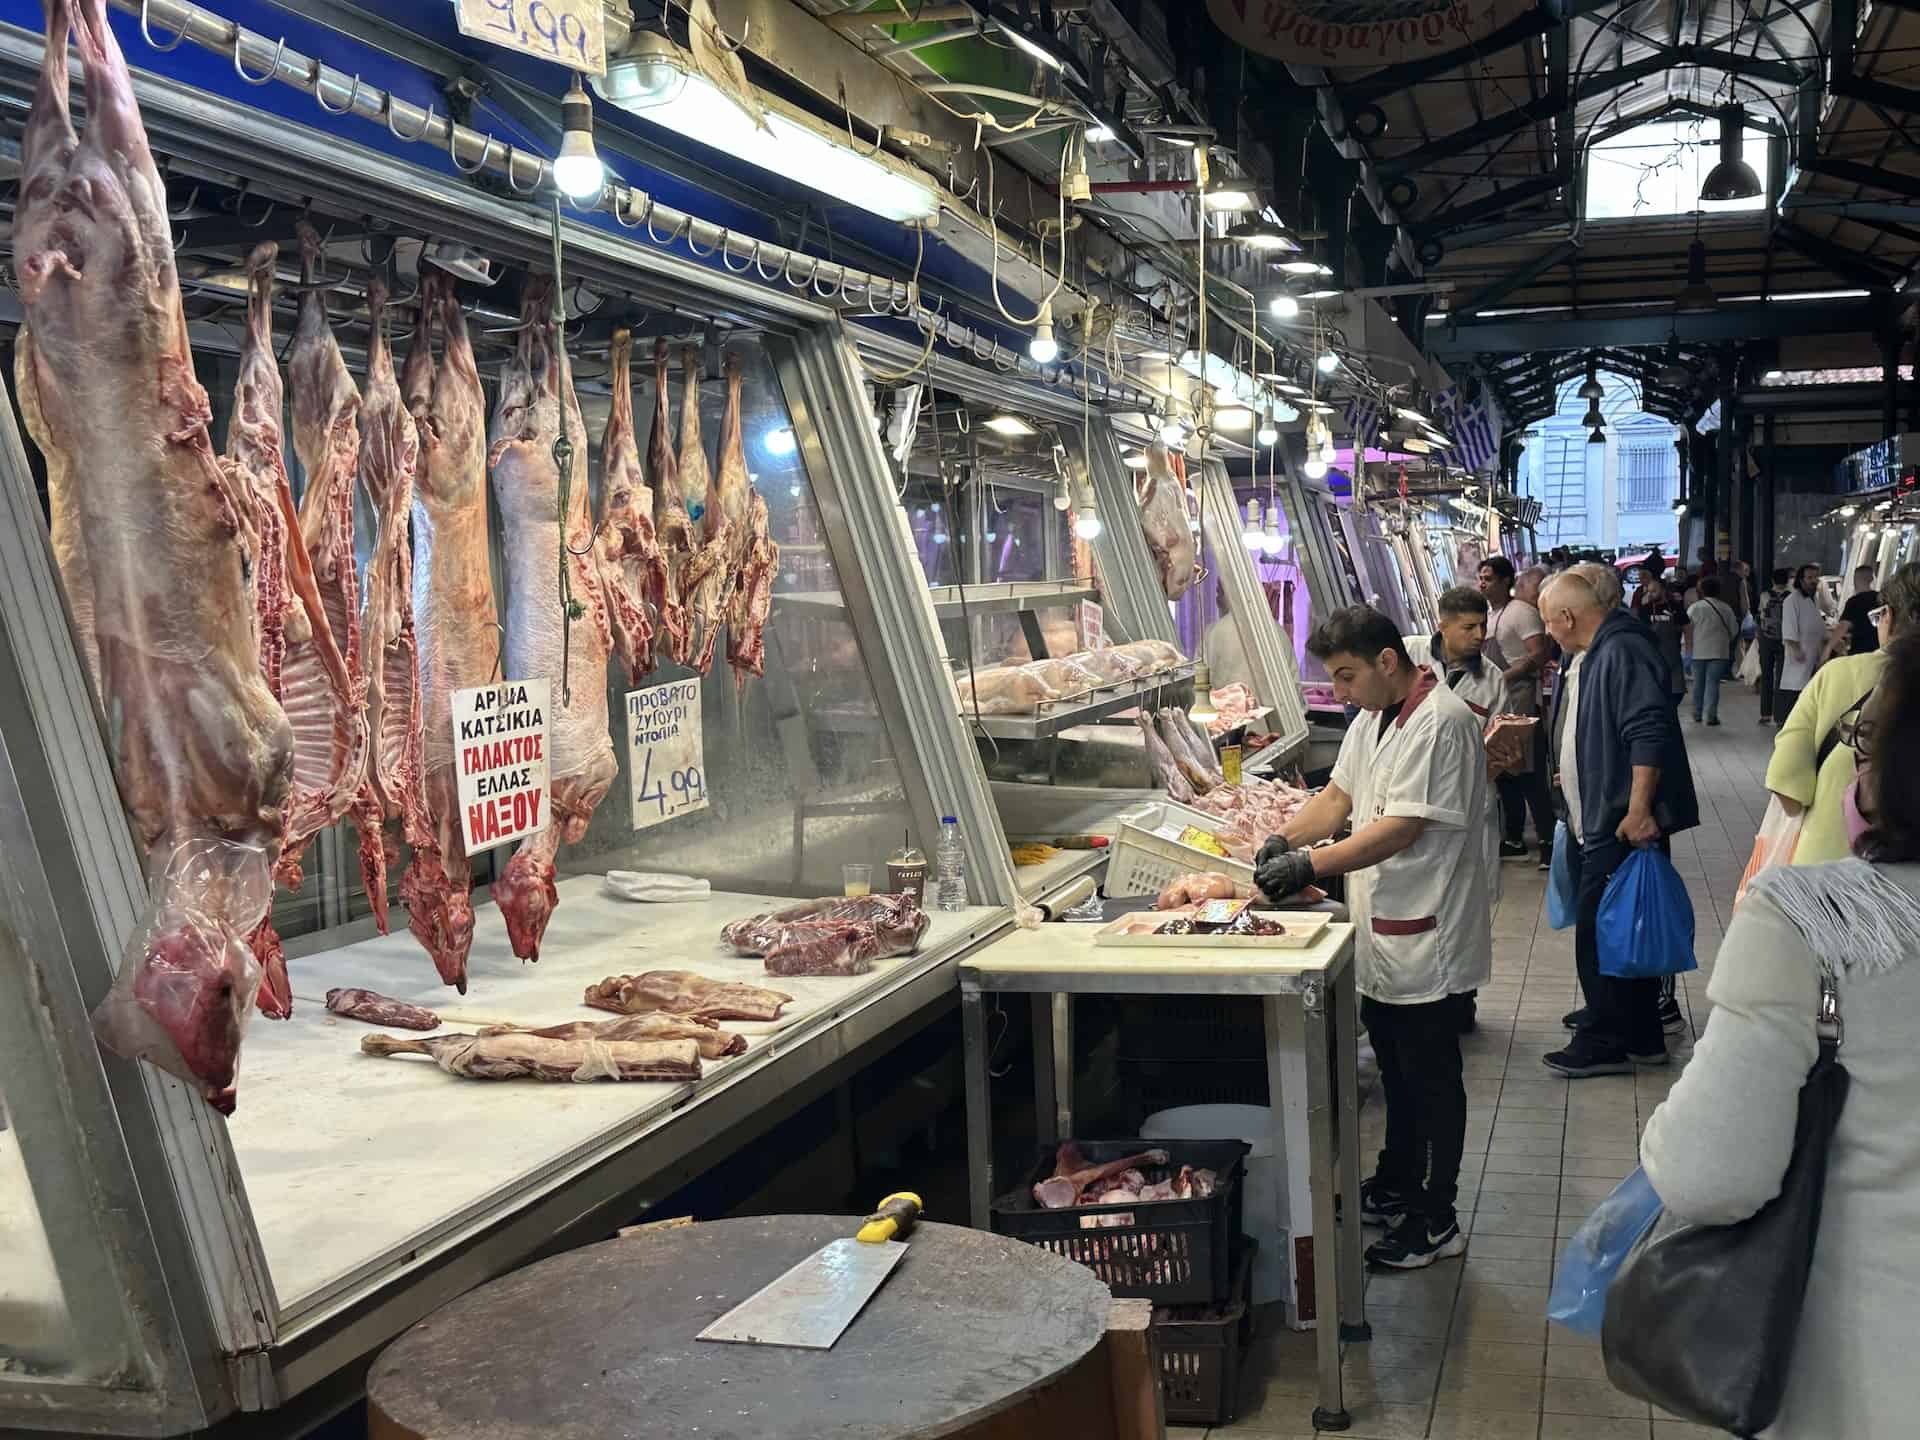 Meat market at Varvakeios Agora in Athens, Greece